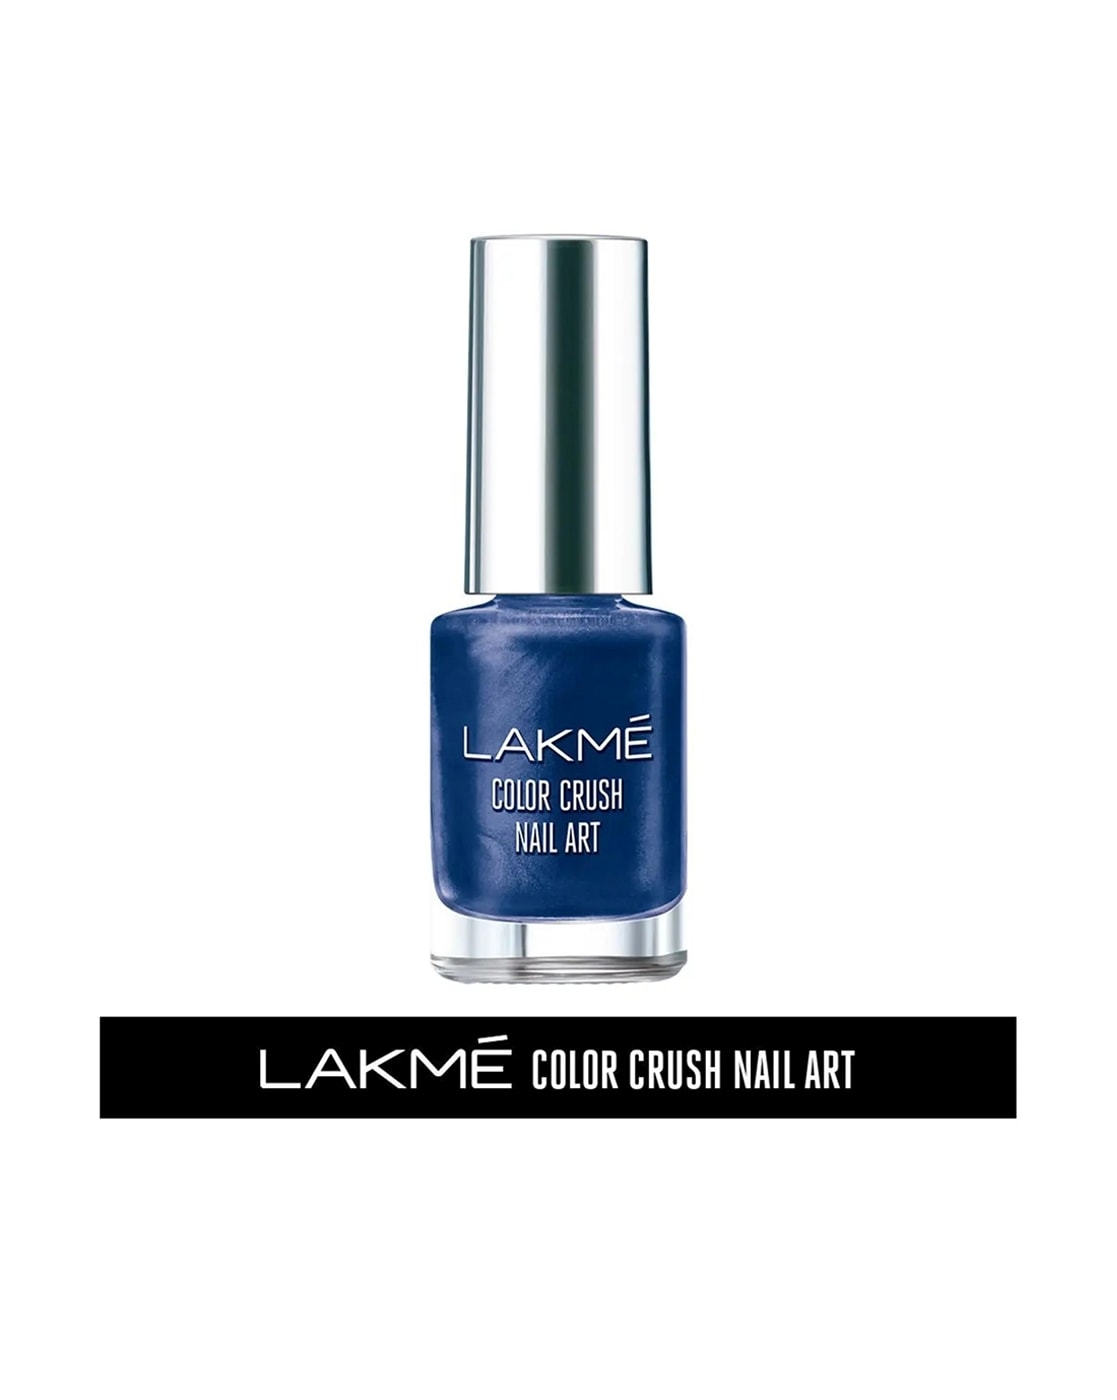 Lakme Color Crush Nail Art - M3 Original Nude Reviews Online | Nykaa